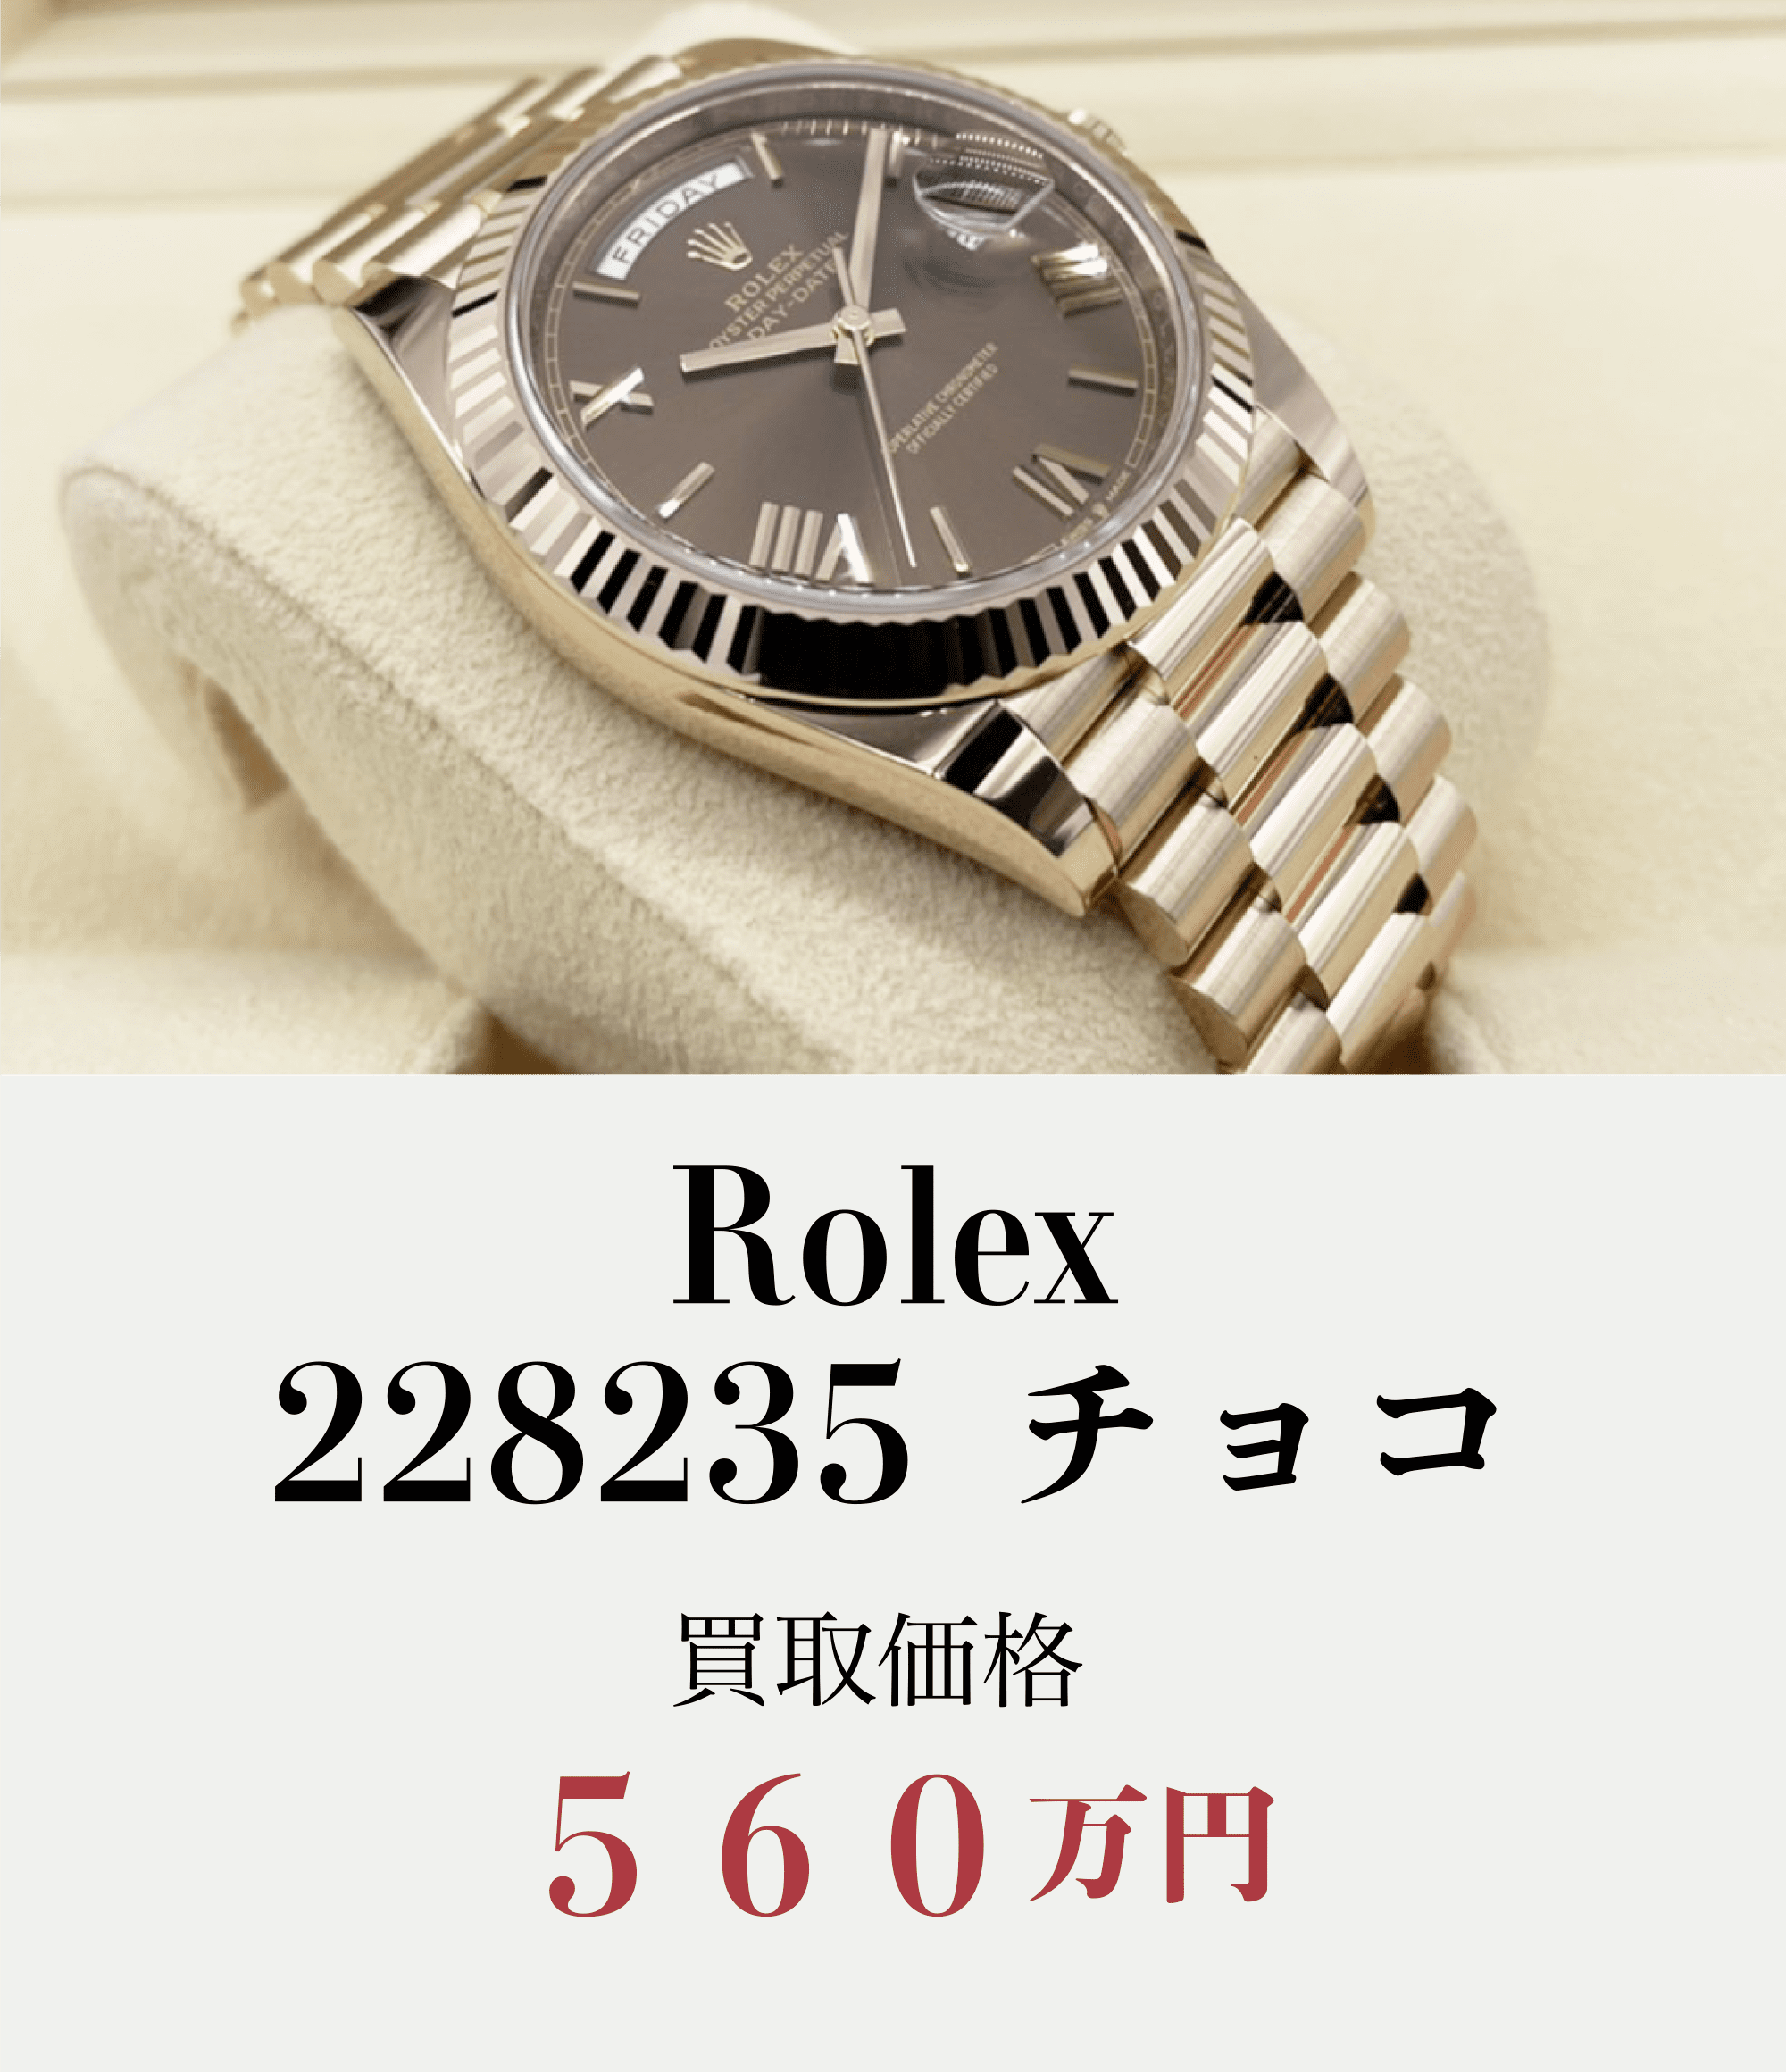 Rolex228235チョコ買取価格560万円